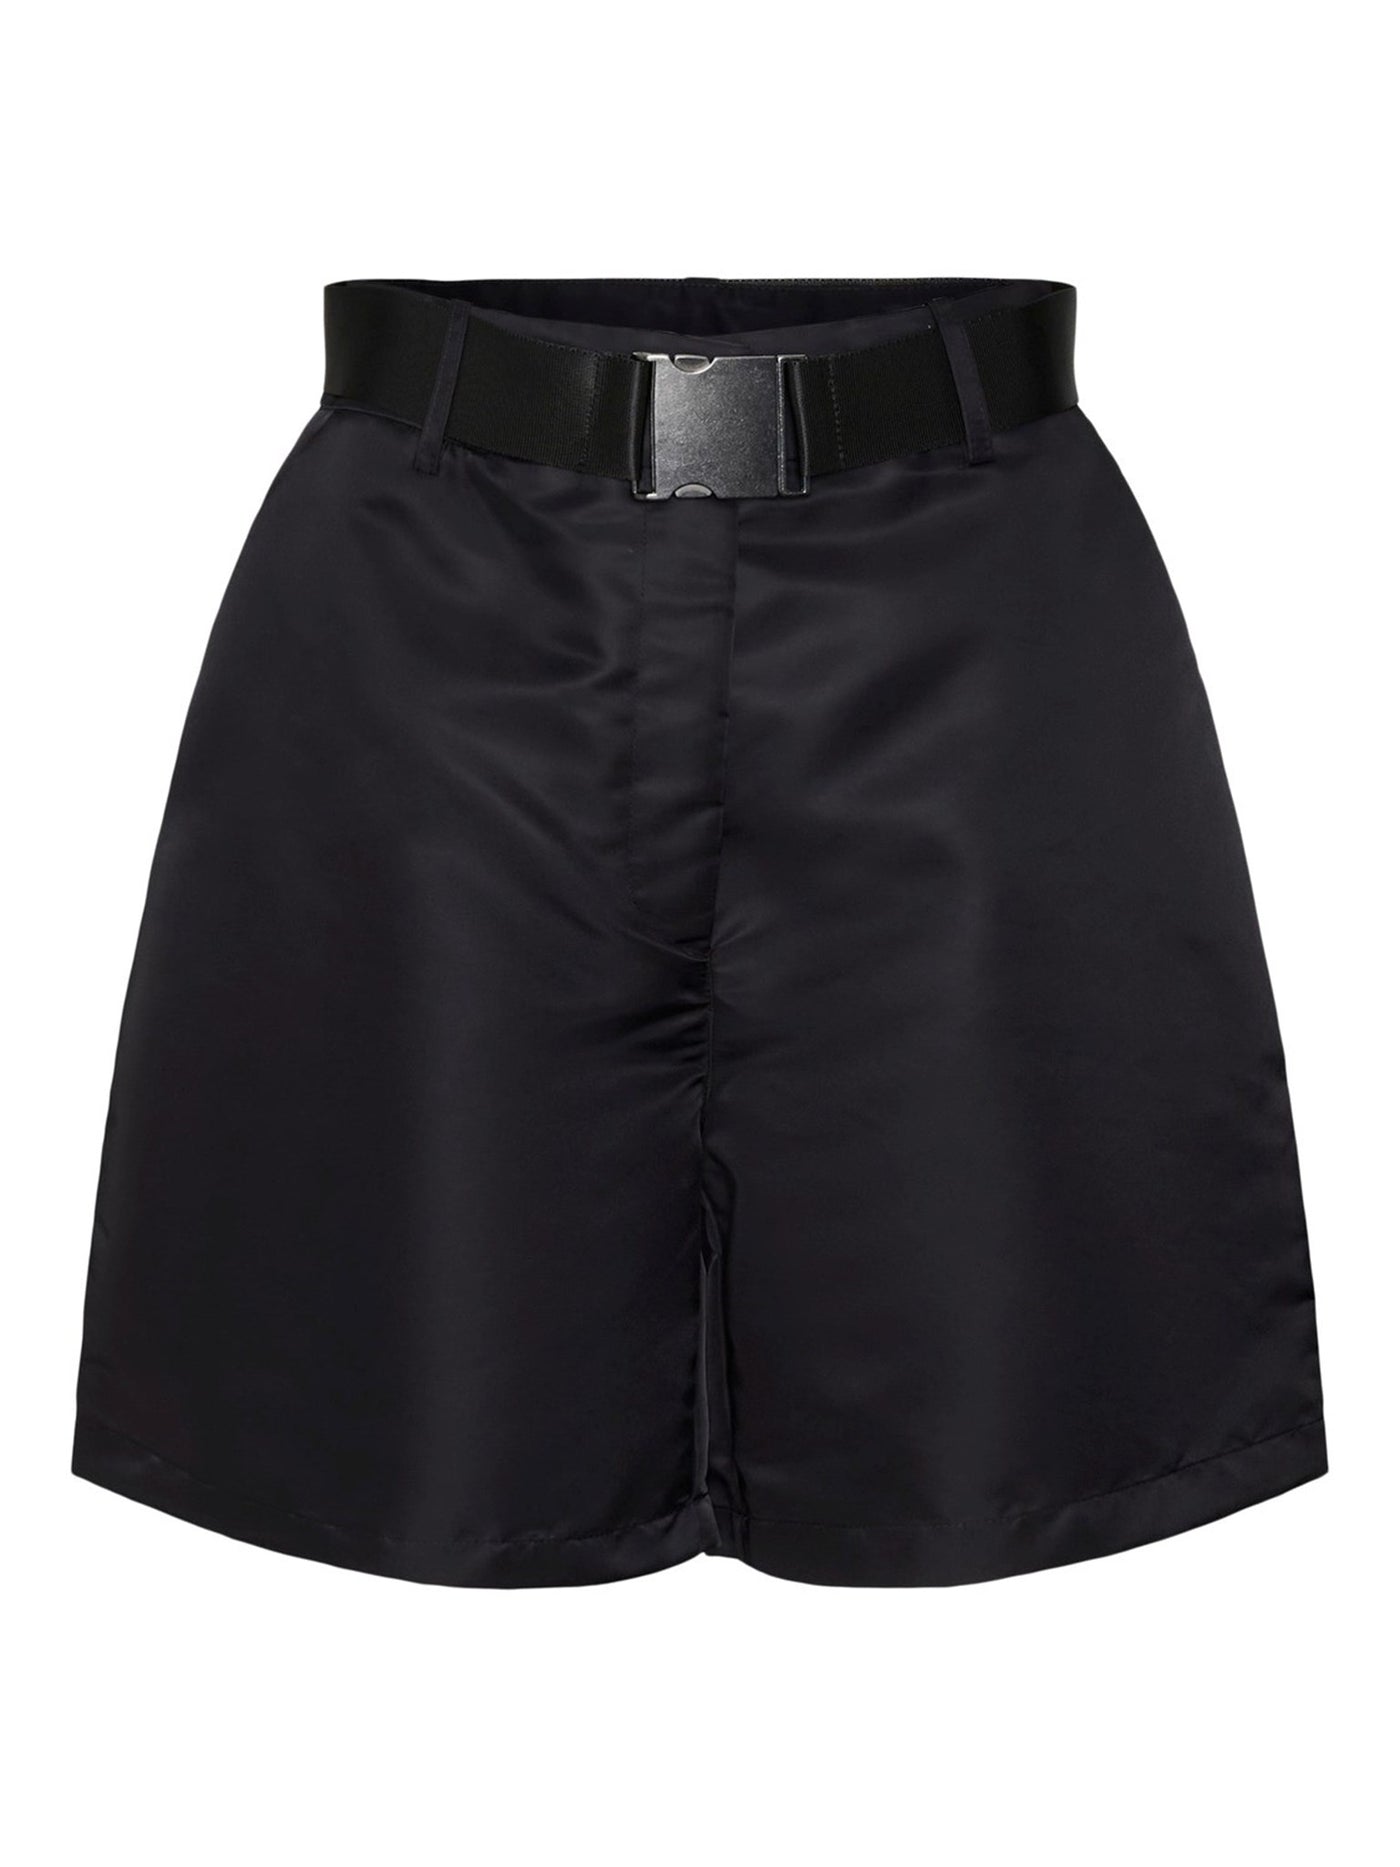 Neco High-Waist Shorts - Sort - Vero Moda - Sort